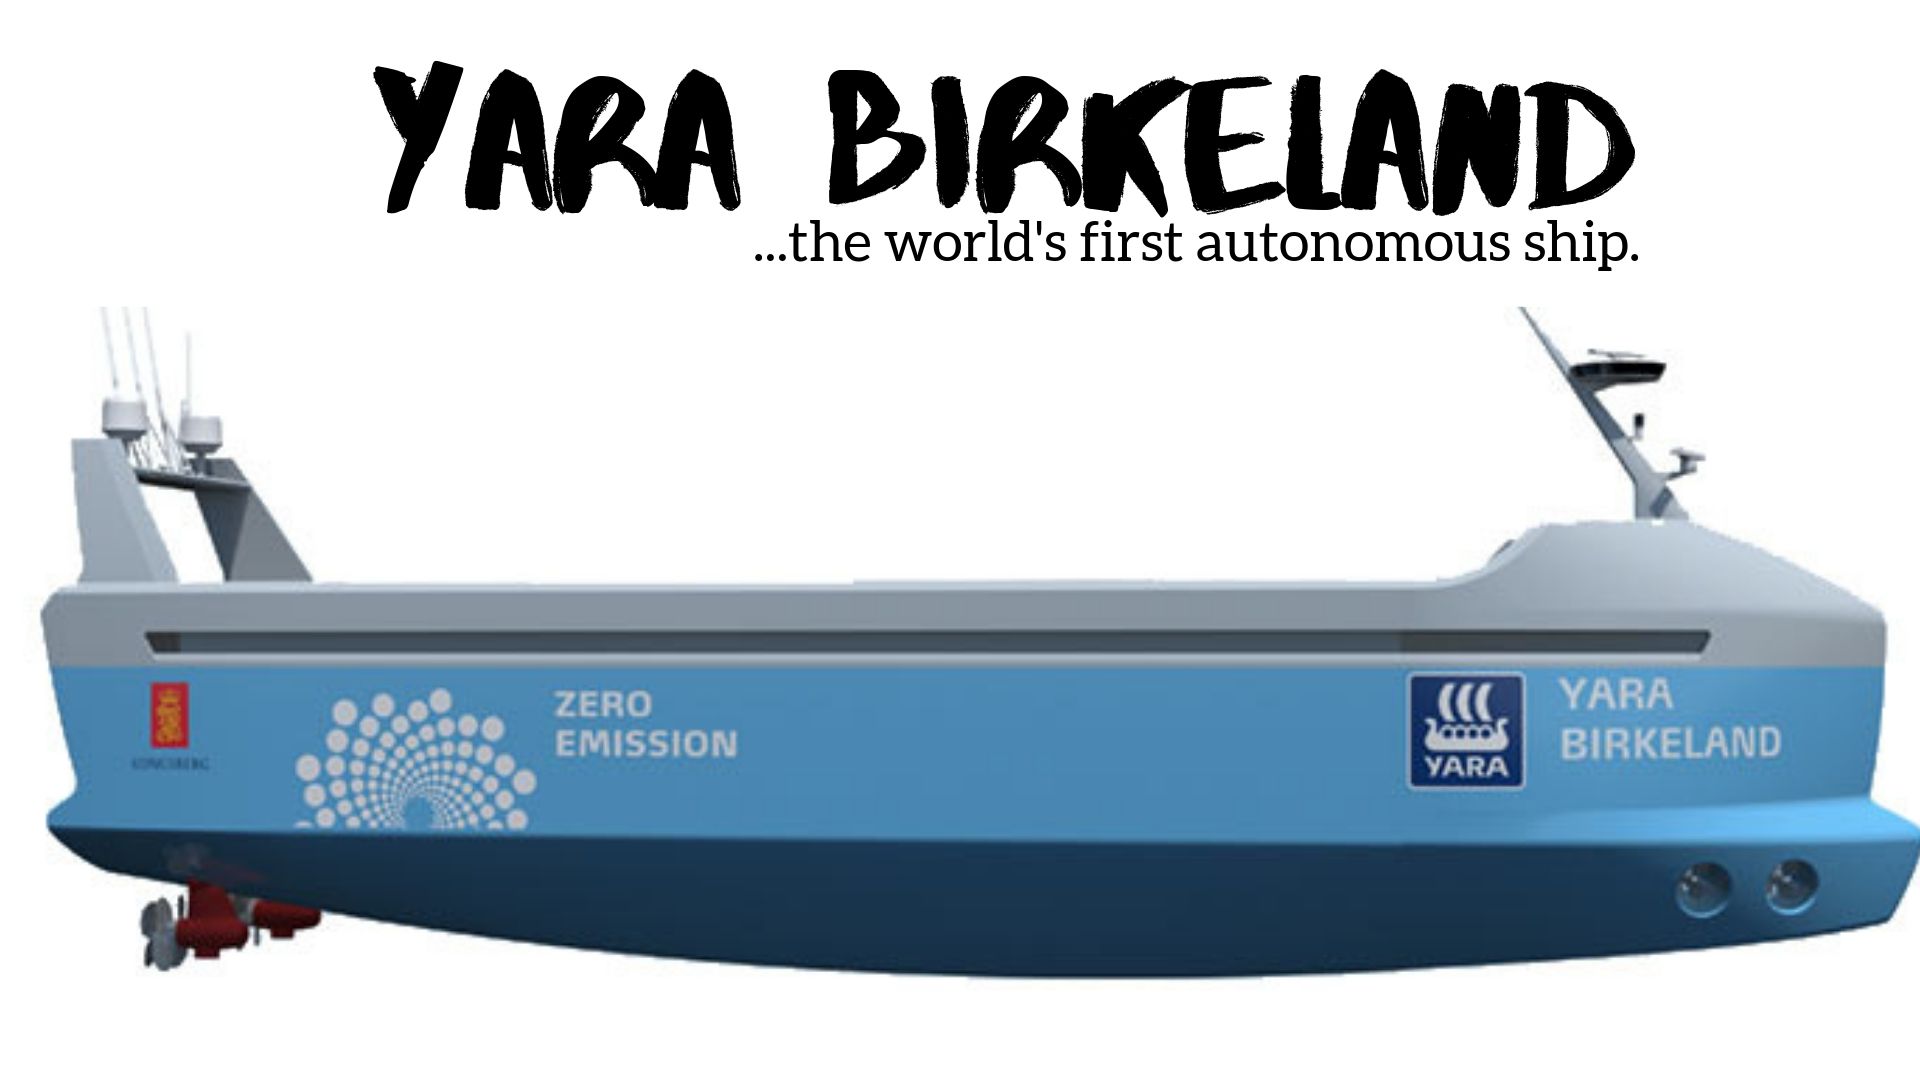 Yara Birkeland is the first autonomous ship - The world's first zero emission, autonomous container feeder.